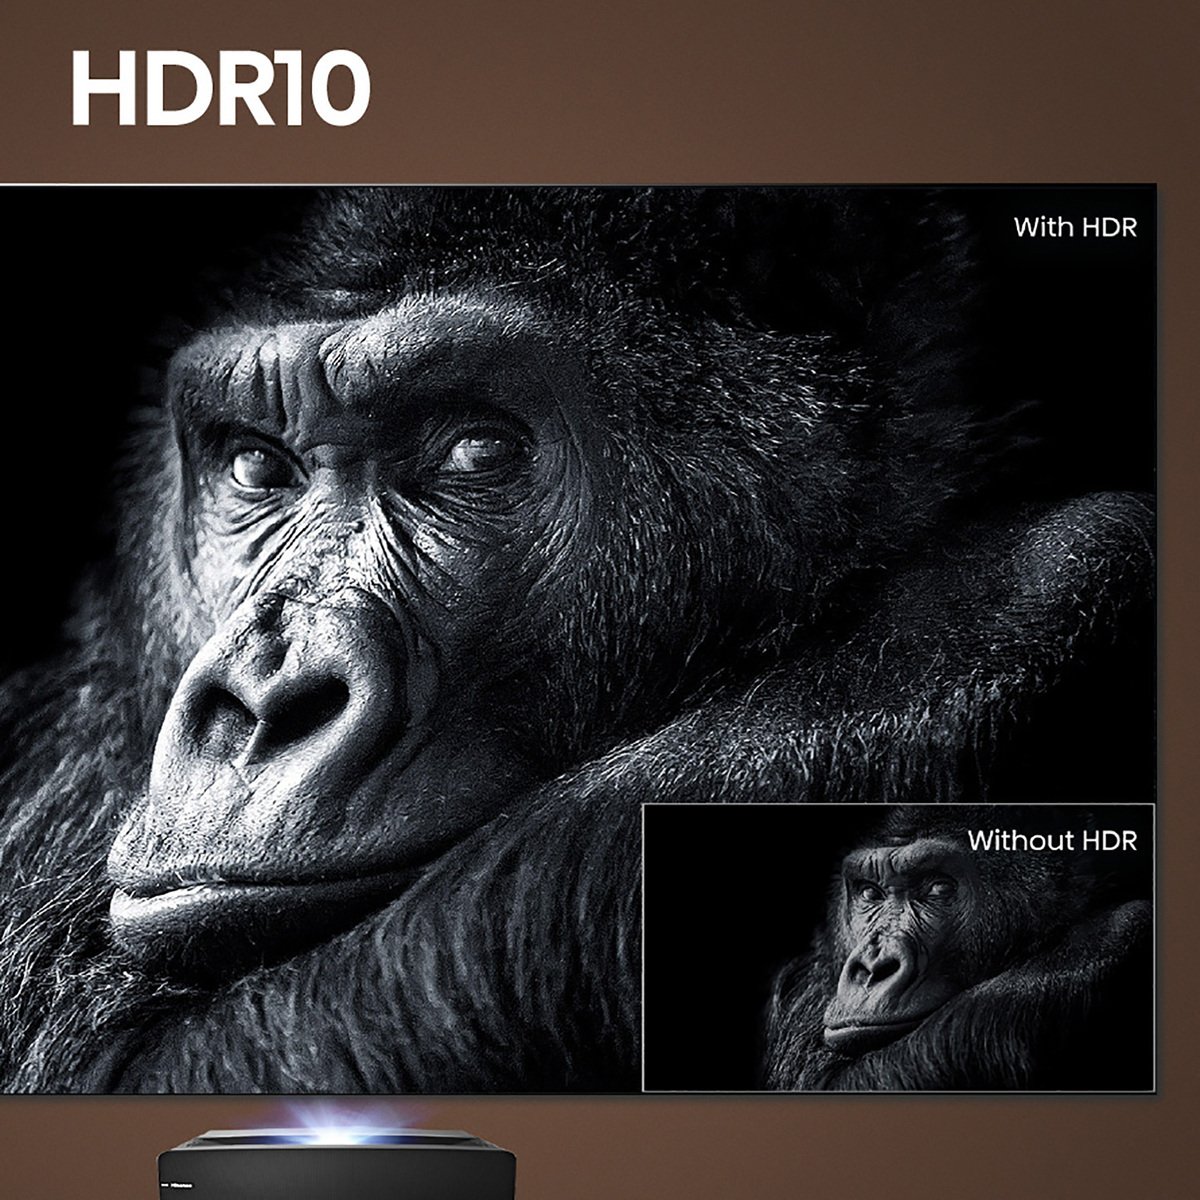 Hisense 120 Inches 4K UHD Laser TV, Black, 120L5G